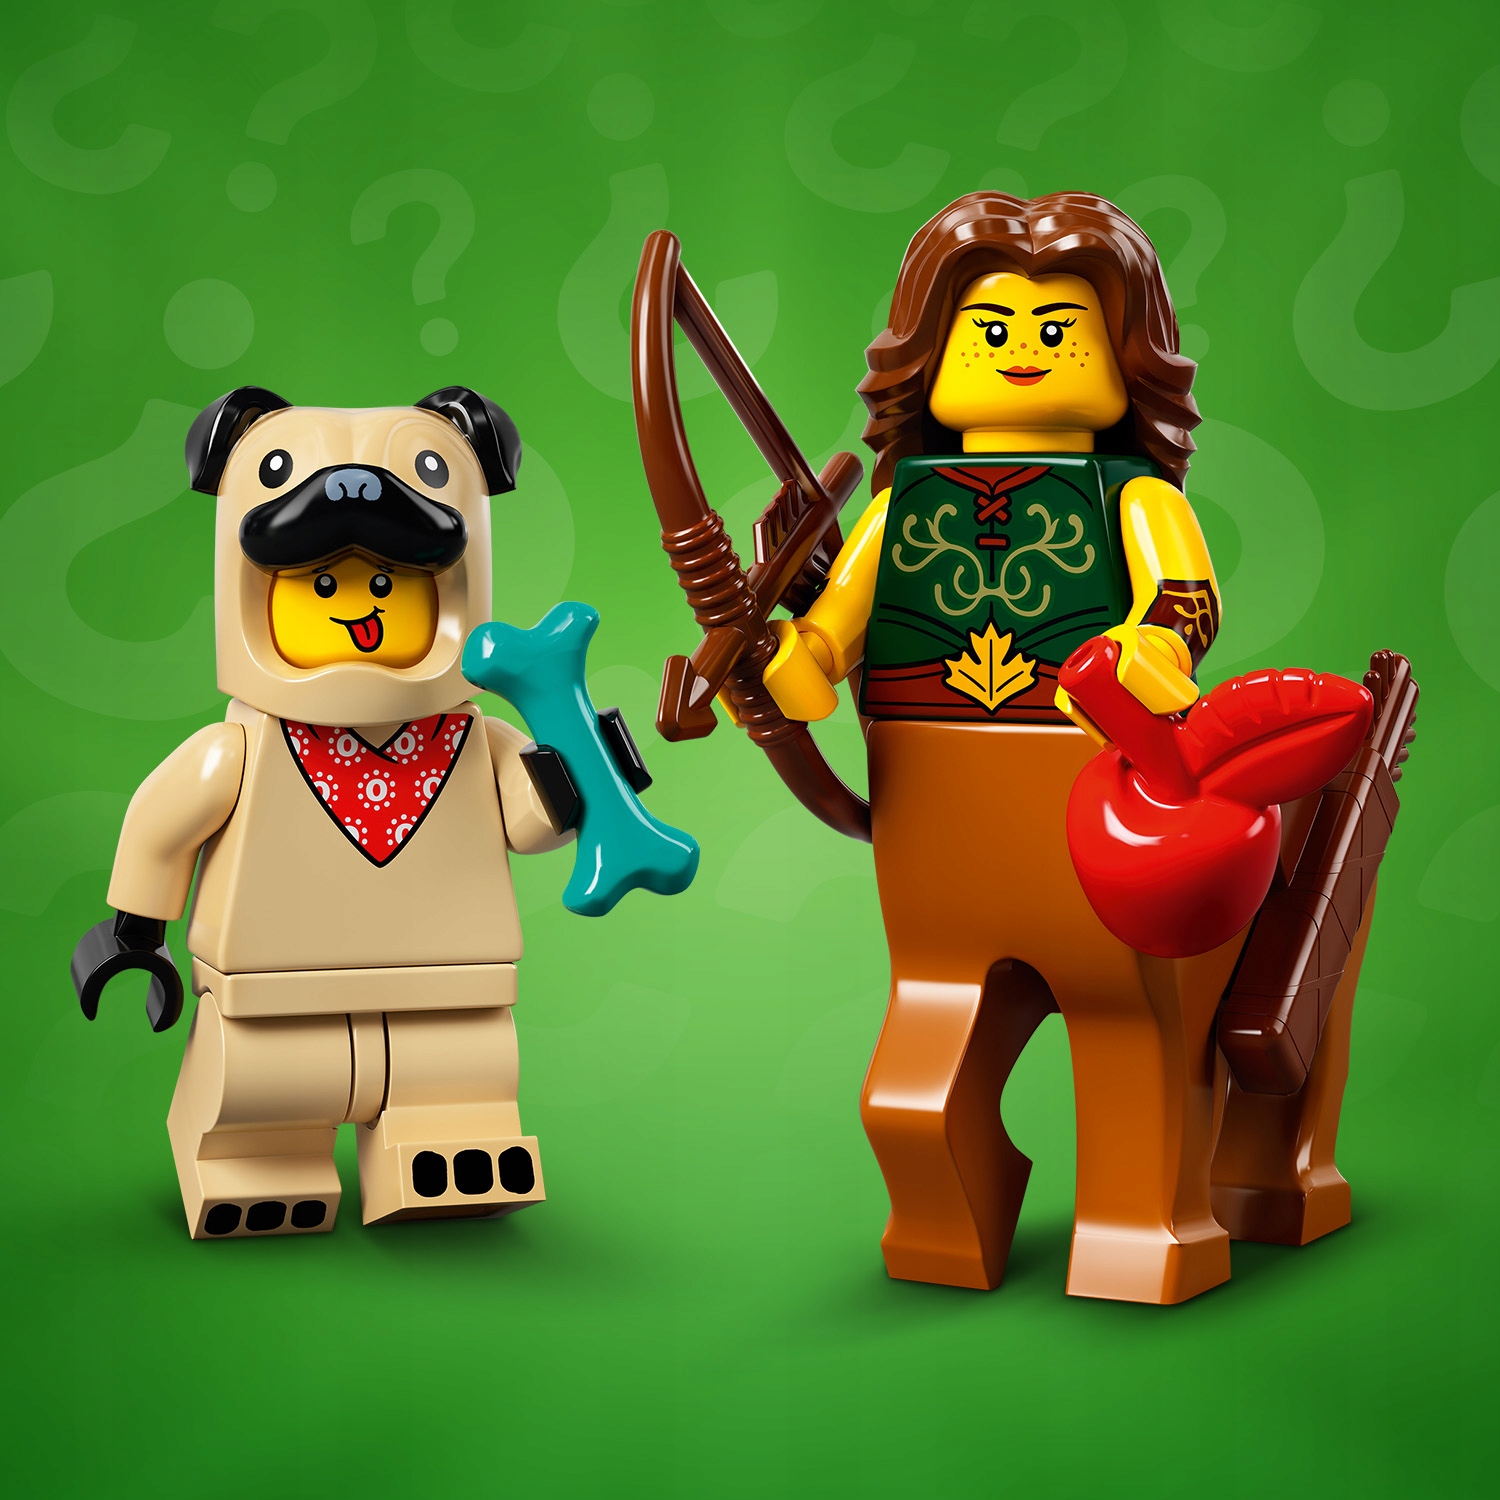 LEGO 71029 Minifigures Series 21